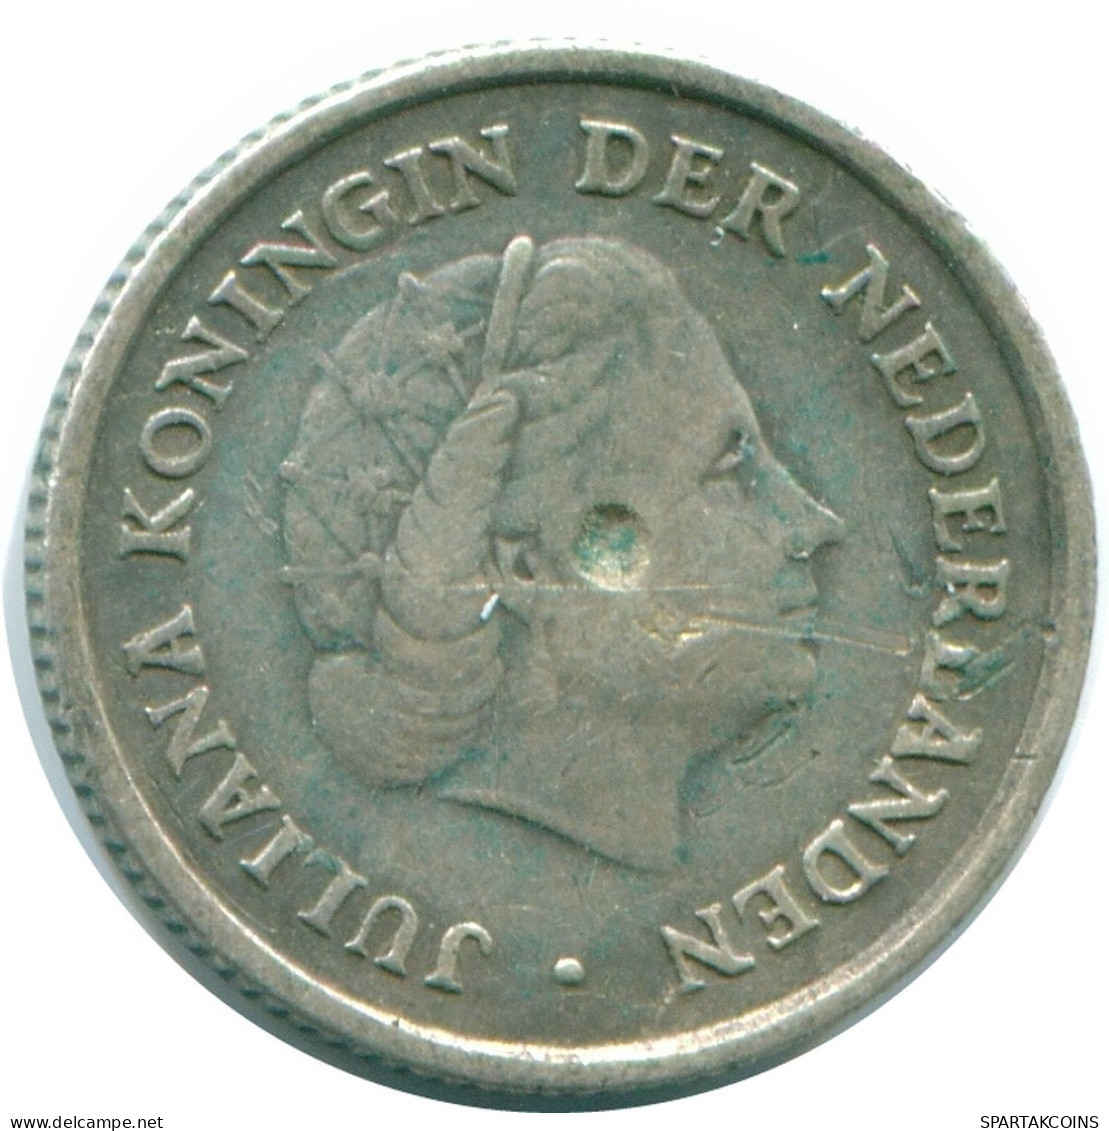 1/10 GULDEN 1962 NETHERLANDS ANTILLES SILVER Colonial Coin #NL12406.3.U.A - Niederländische Antillen